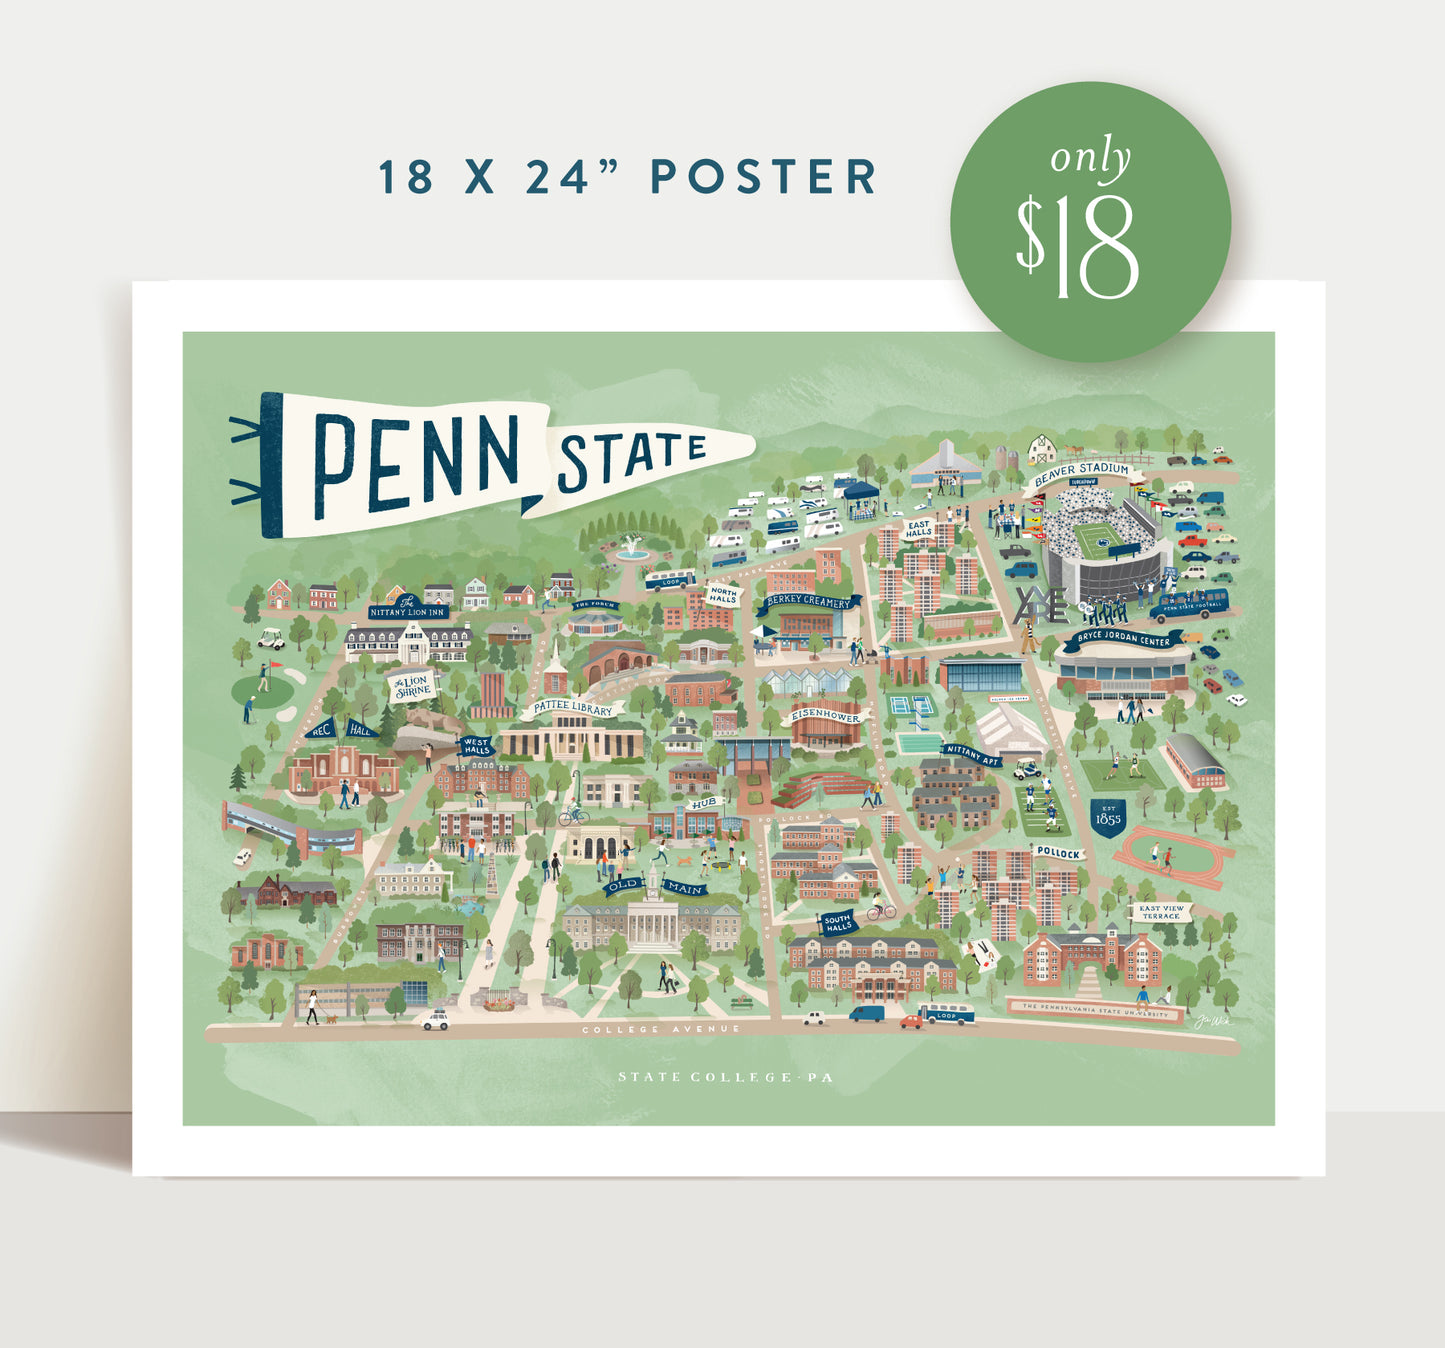 Penn State 18x24 poster